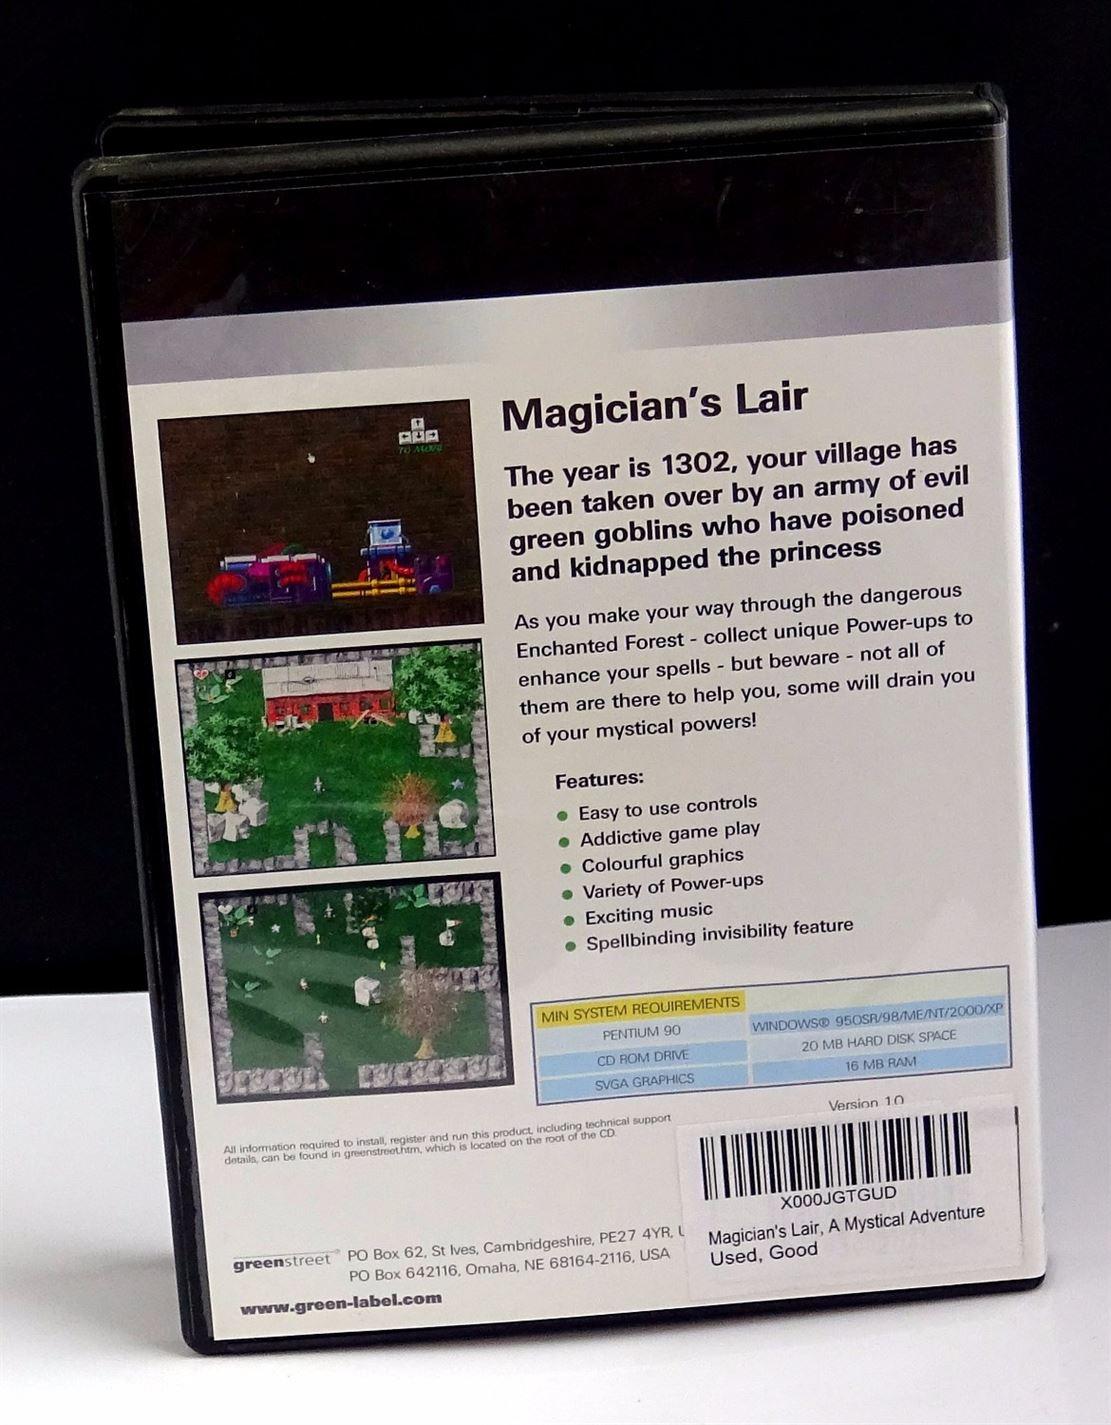 Magician's Lair - A Mystical Adventure (PC) - UK Seller